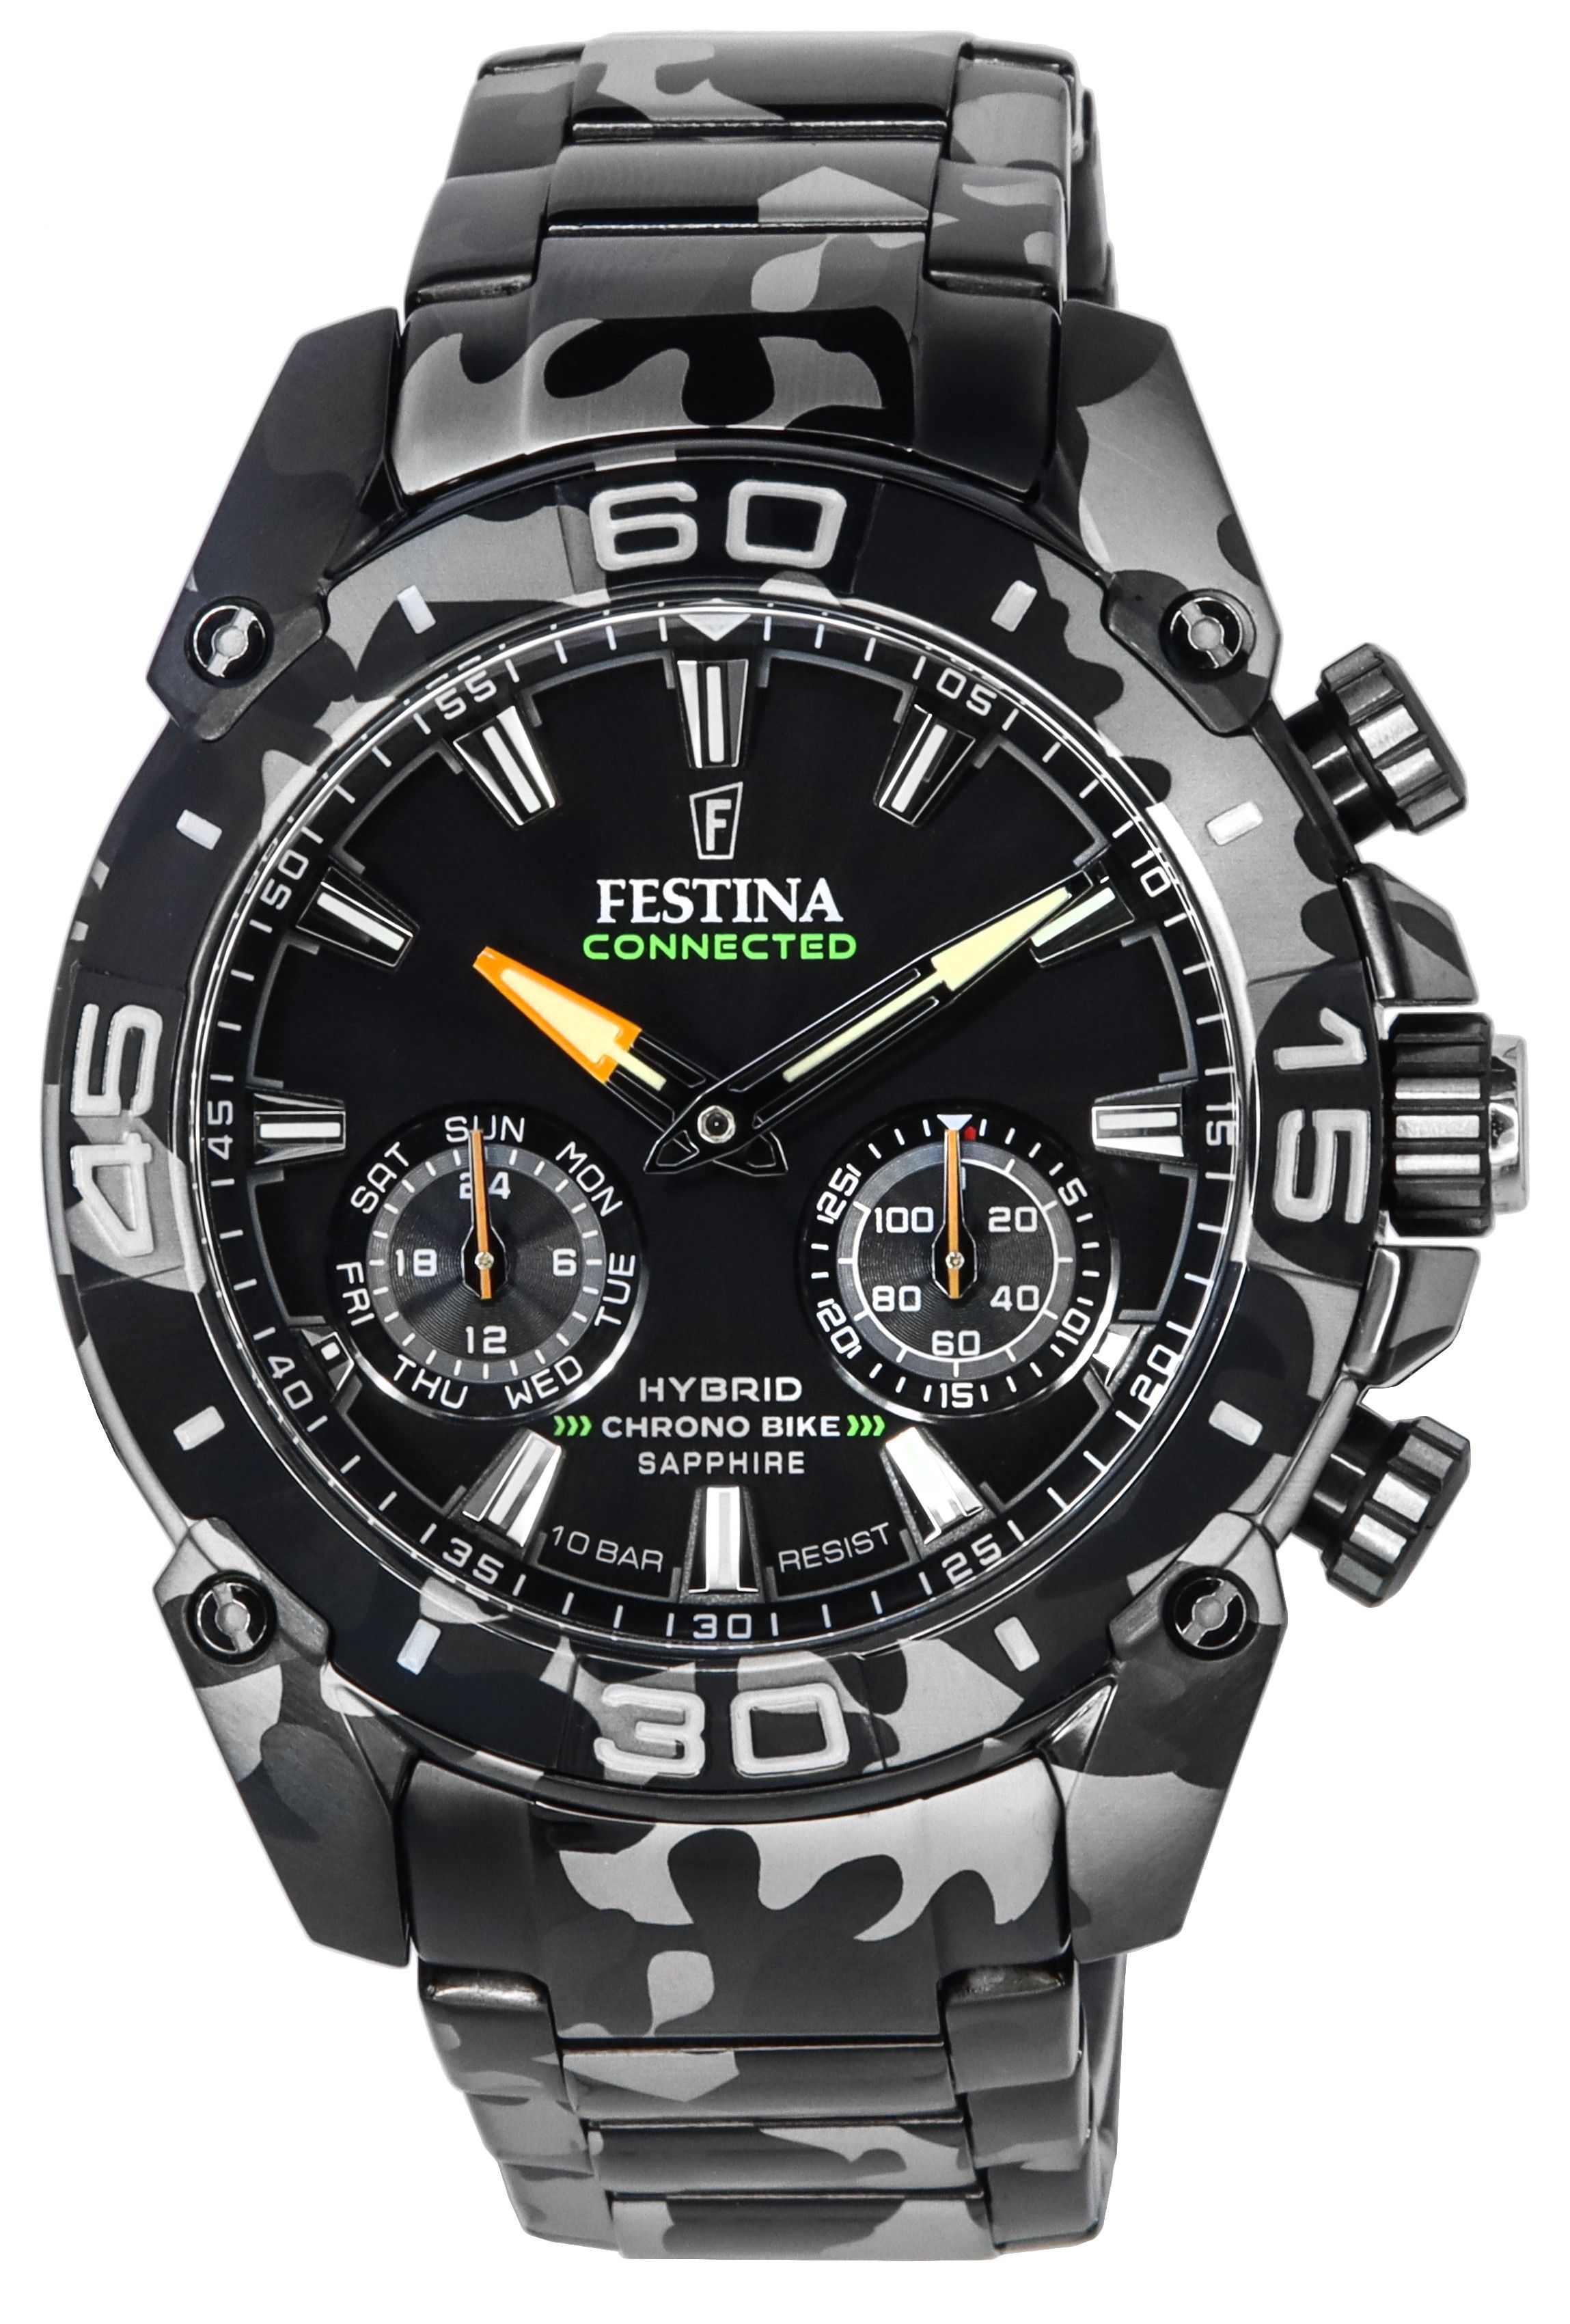 Festina Chronograph Bike Hybrid Connected Special Edition Black Dial Quartz F20545-1 F205451 100M Men's Watch